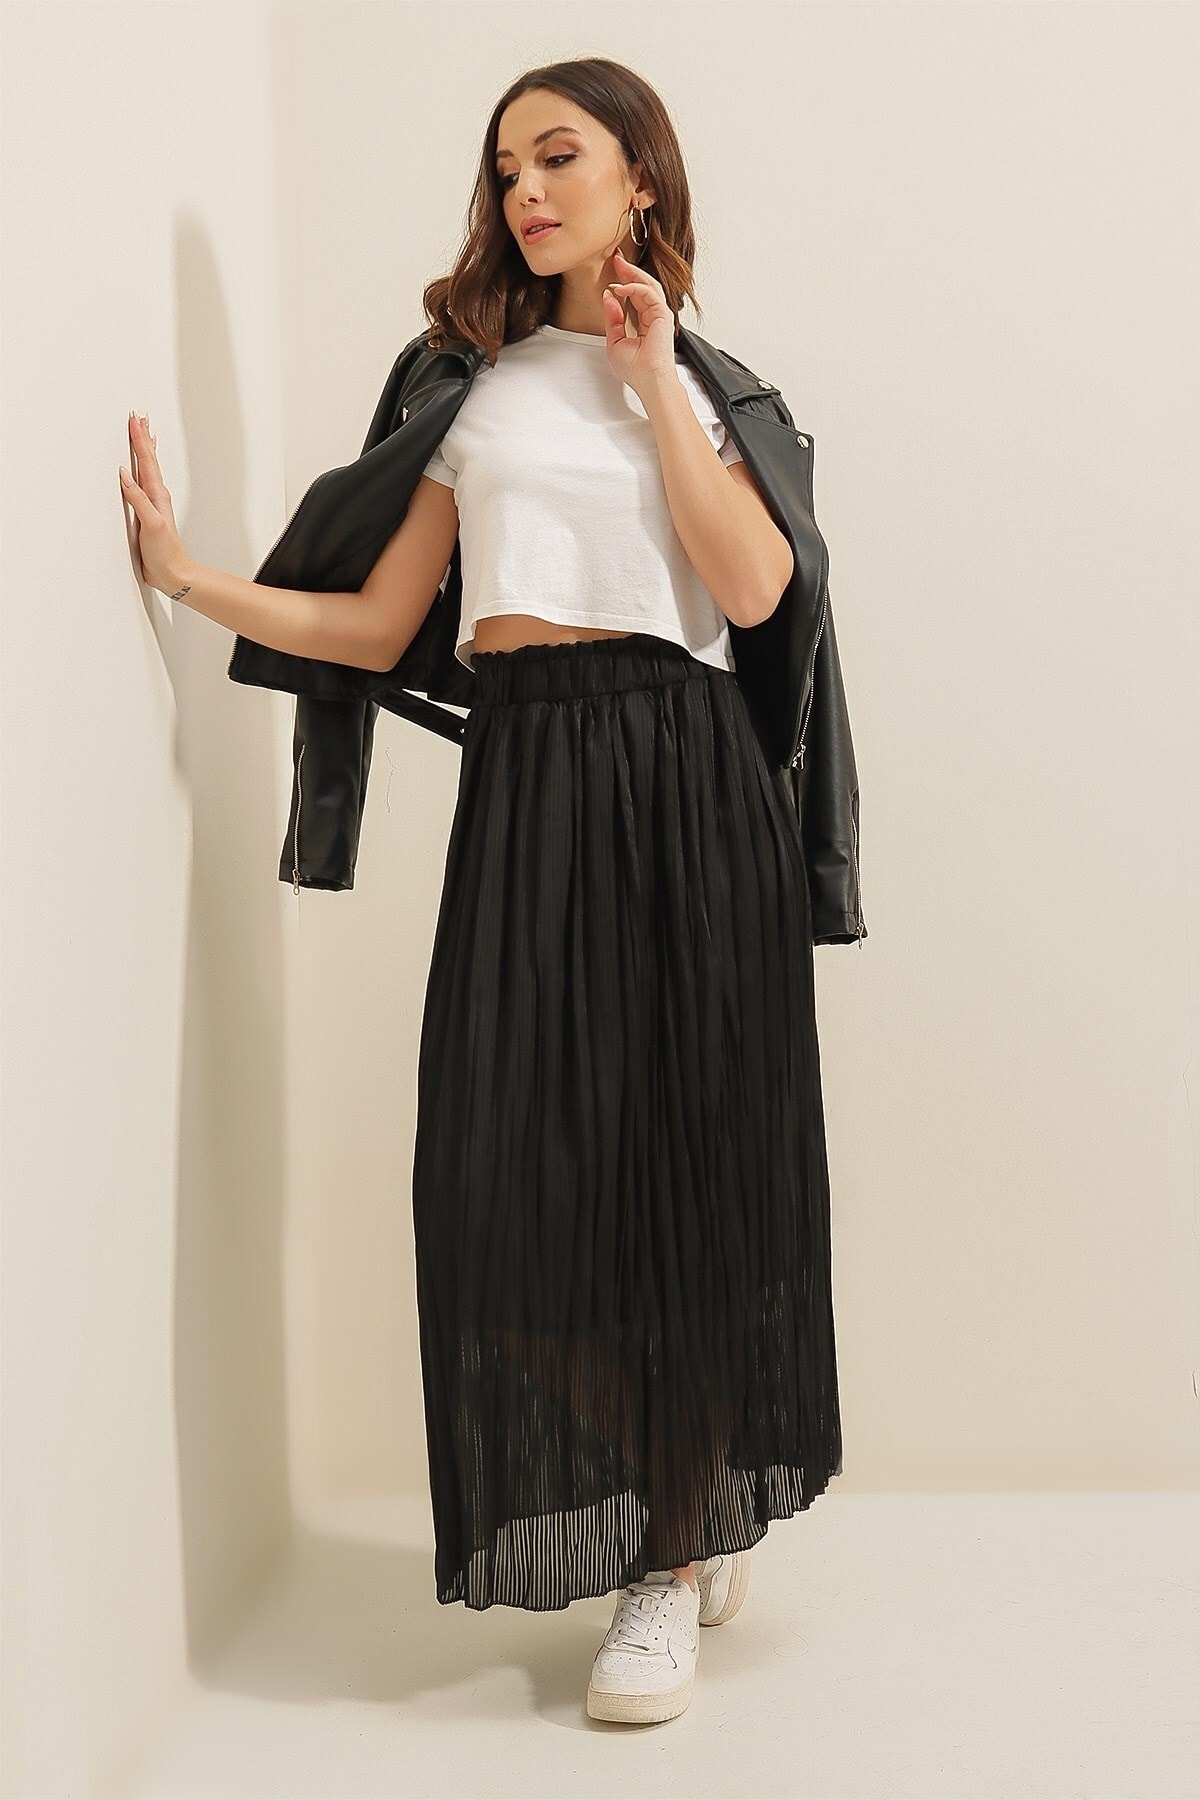 By Saygı Elastic Waist and Lined Slim Satin Striped Skirt Black